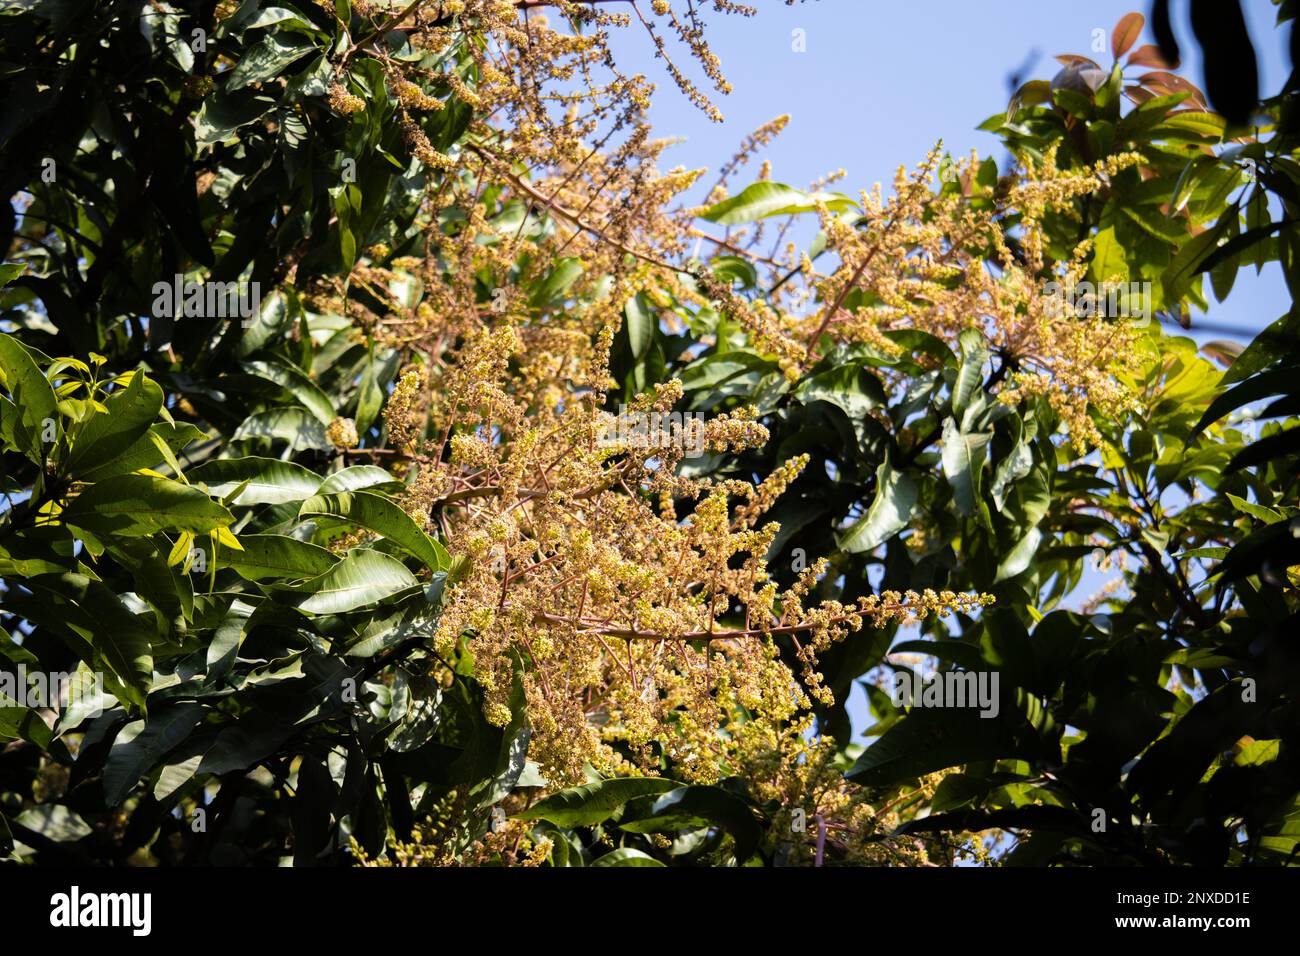 https://c8.alamy.com/comp/2NXDD1E/a-branch-of-yellow-color-mango-flower-in-a-mango-tree-during-spring-season-2NXDD1E.jpg